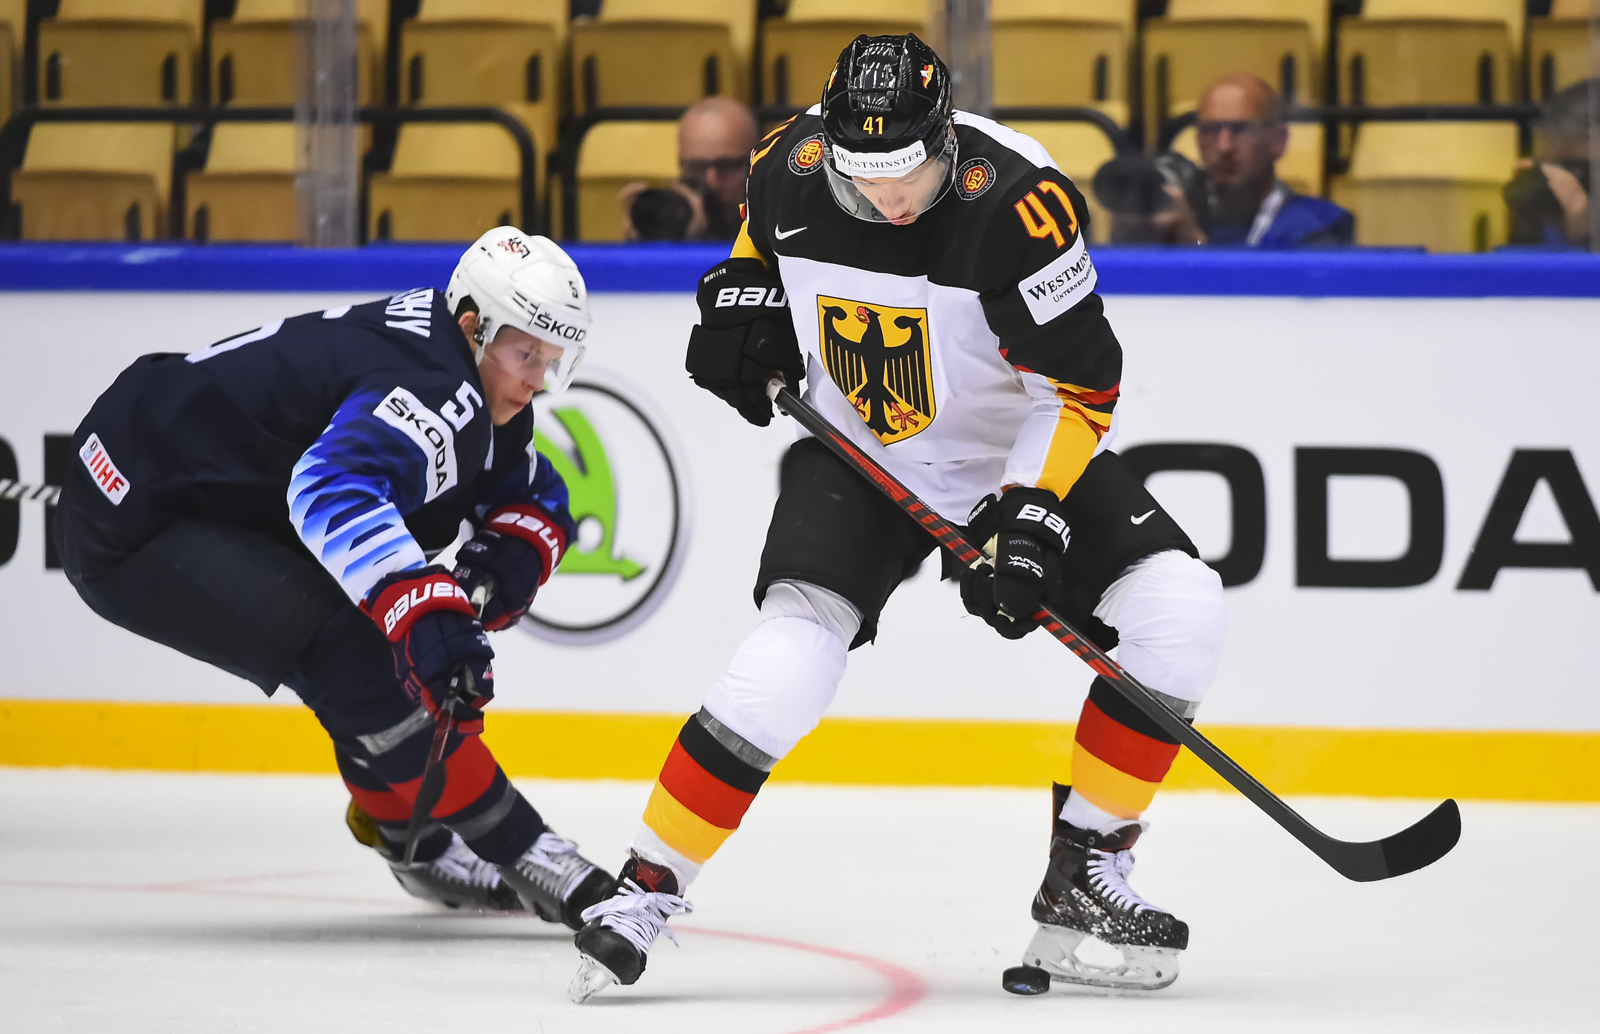 IIHF - Gallery: USA vs. Germany